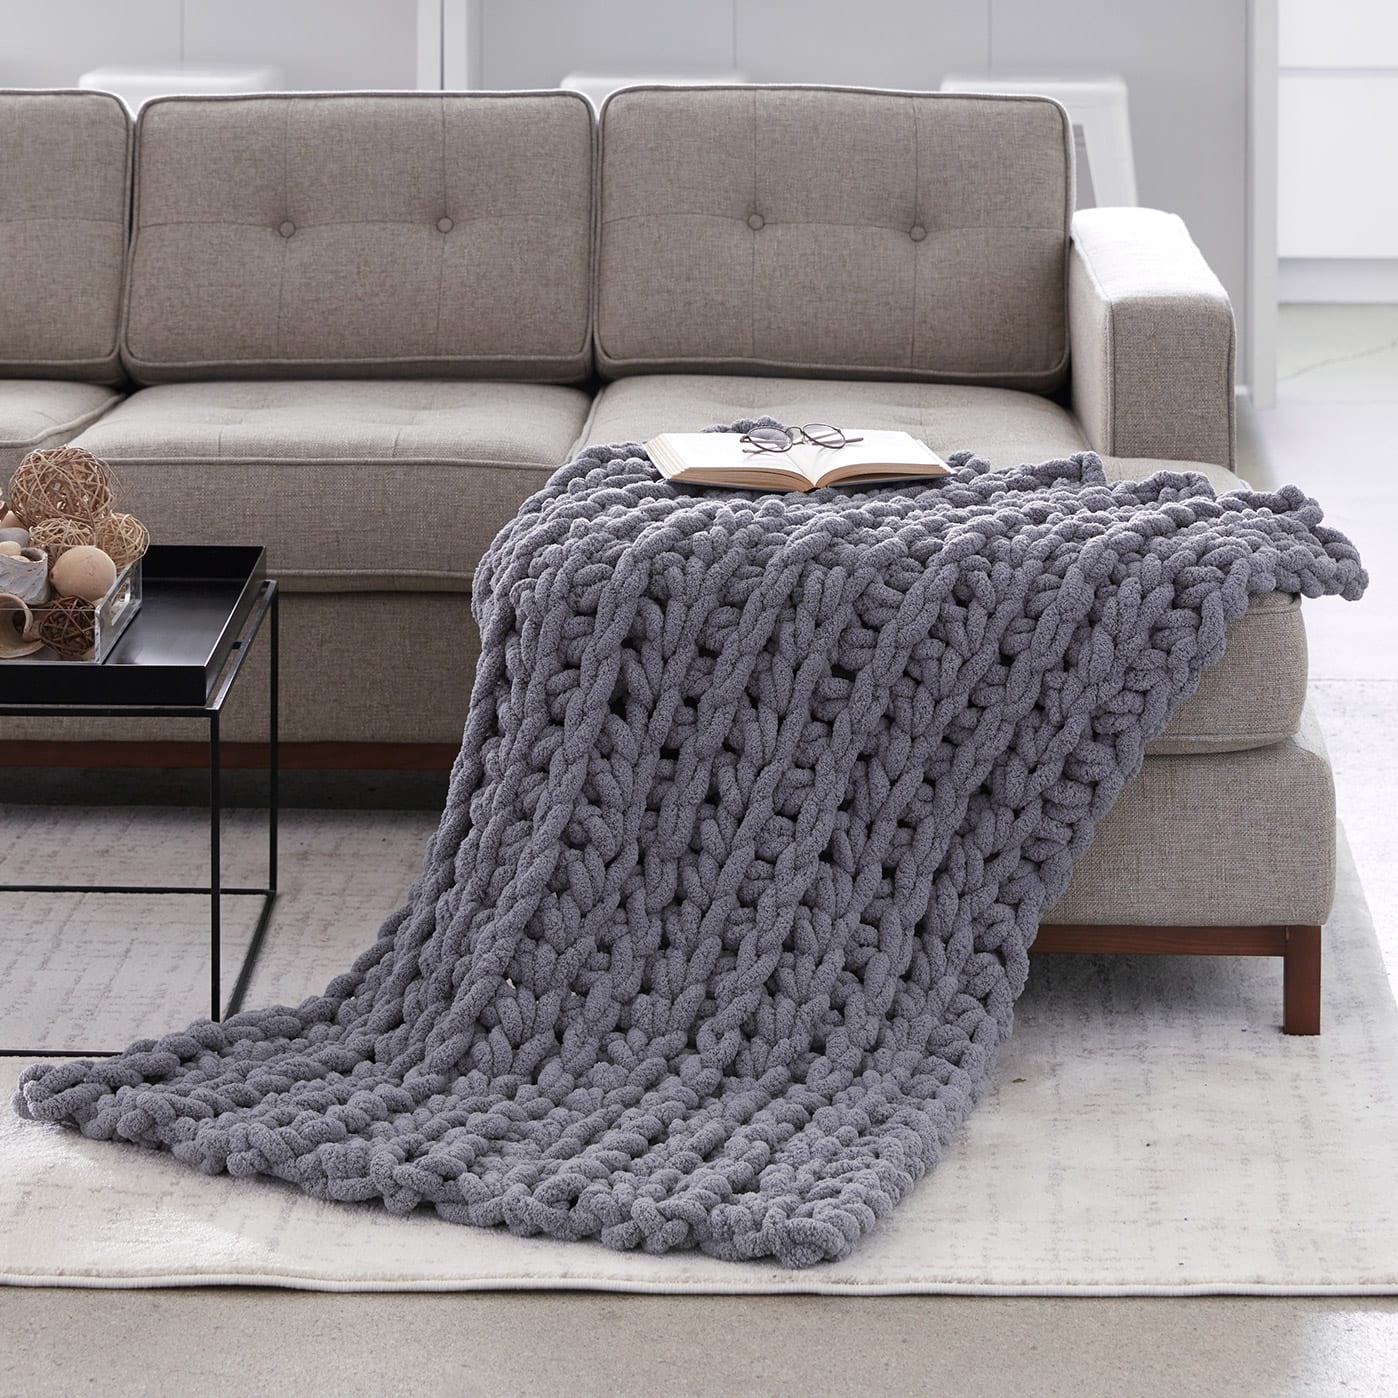 Bernat® Blanket Big™ Yarn